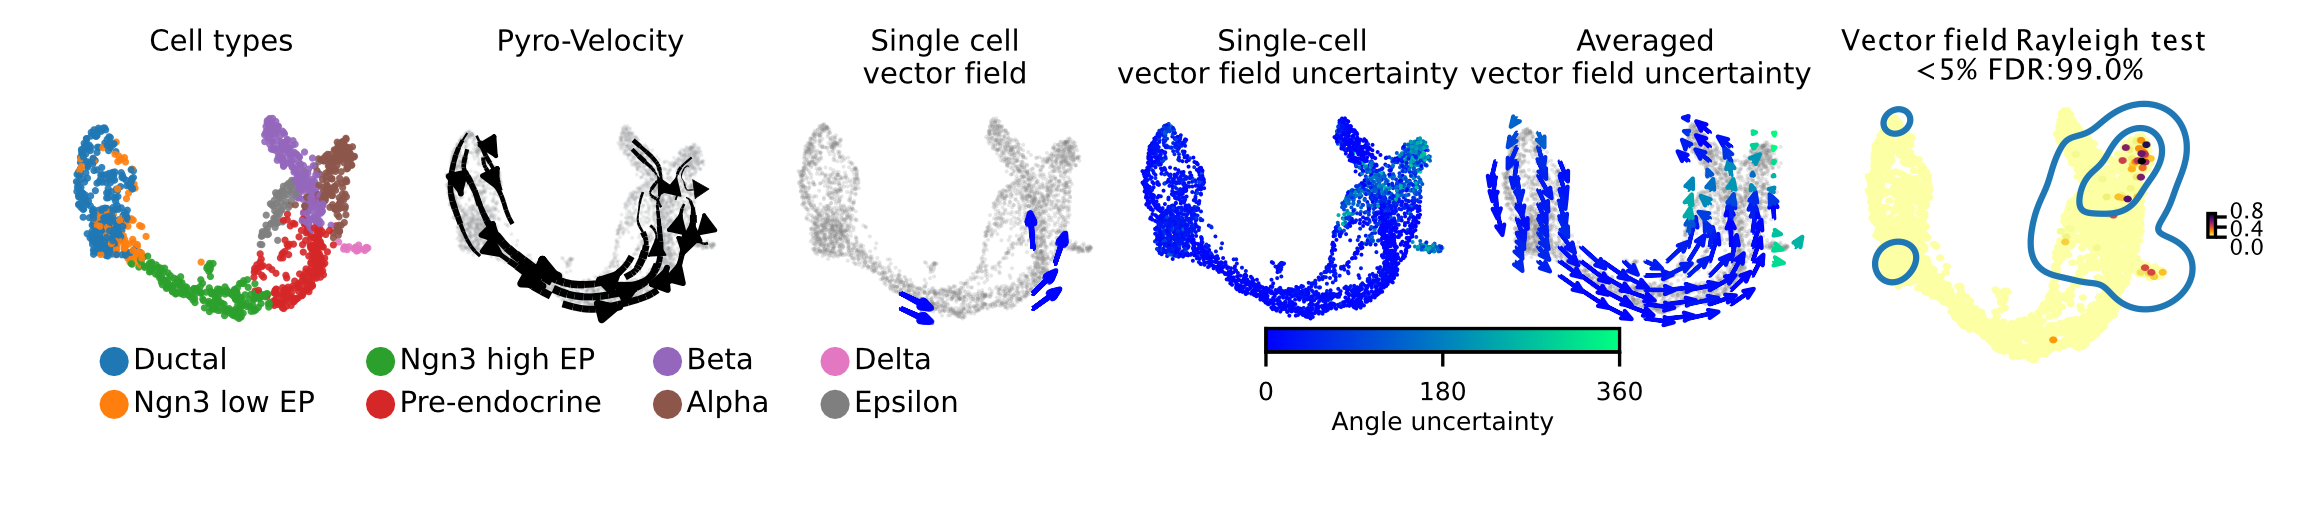 Pancreas vector field uncertainty